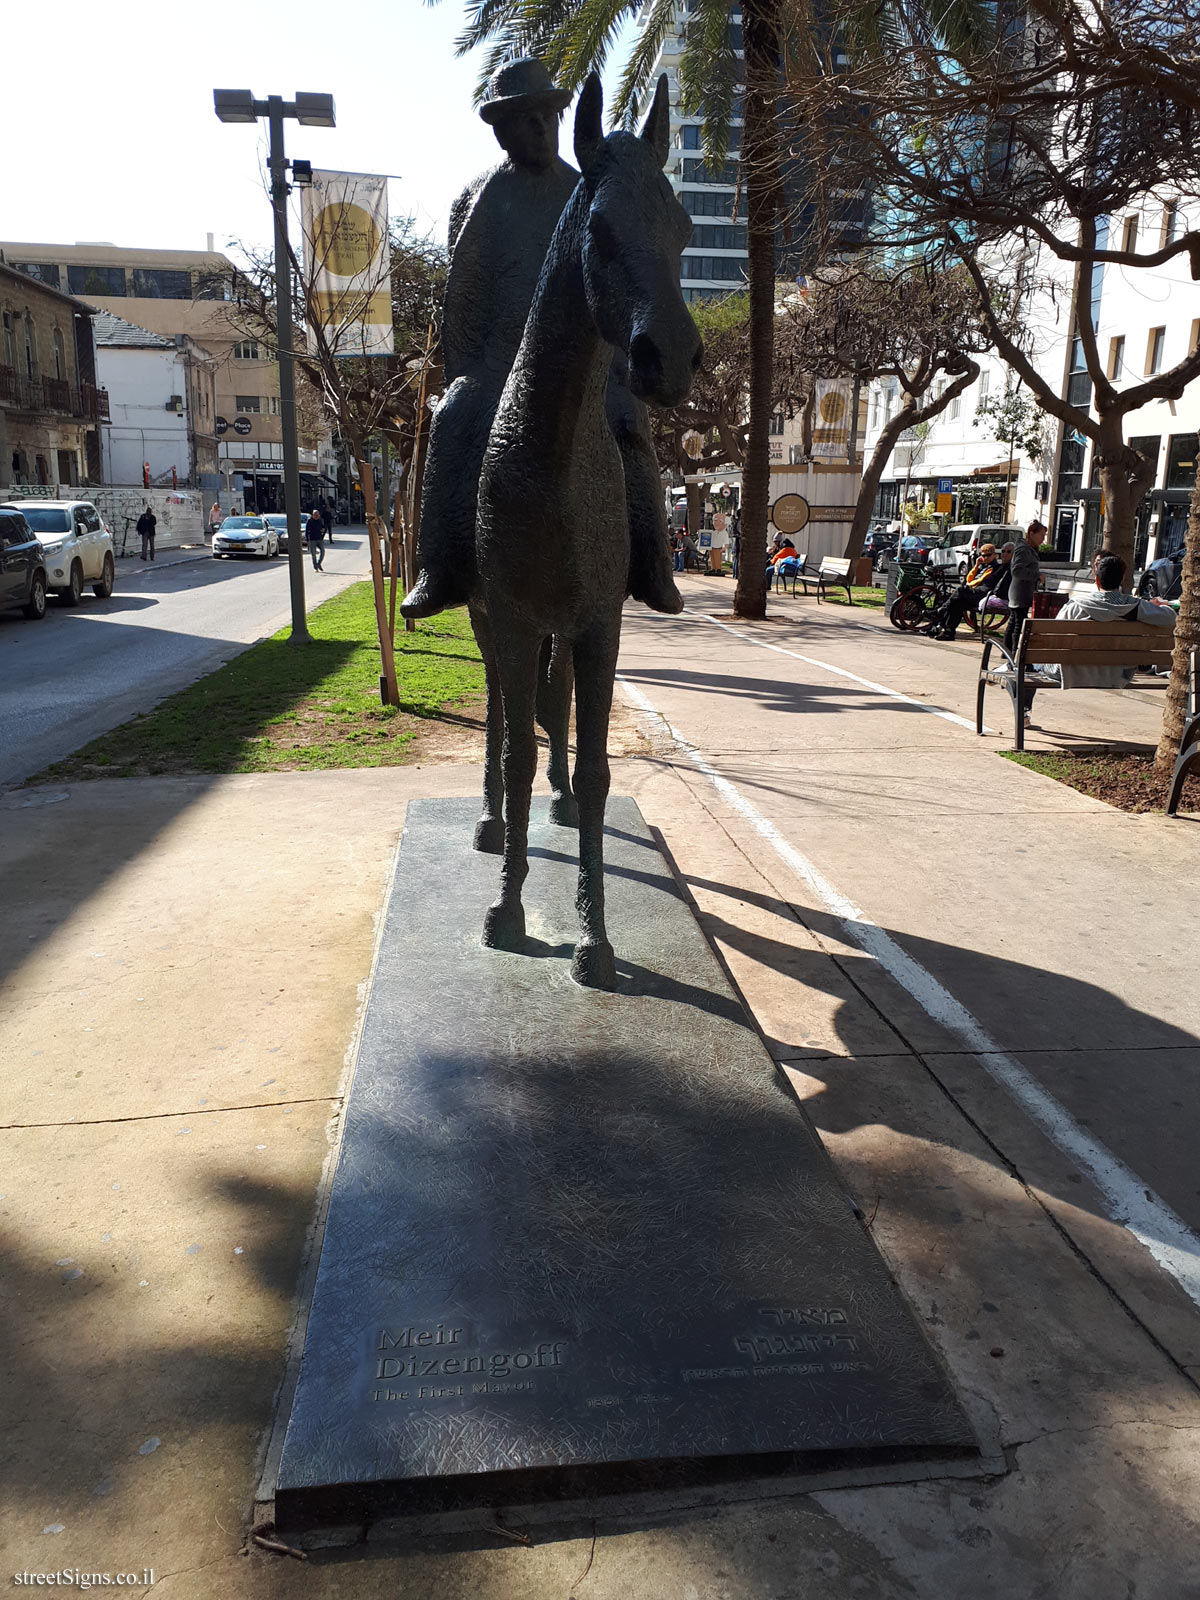 Independence Trail - Statue of Meir Dizengoff - Rothschild Blvd 16, Tel Aviv-Yafo, Israel